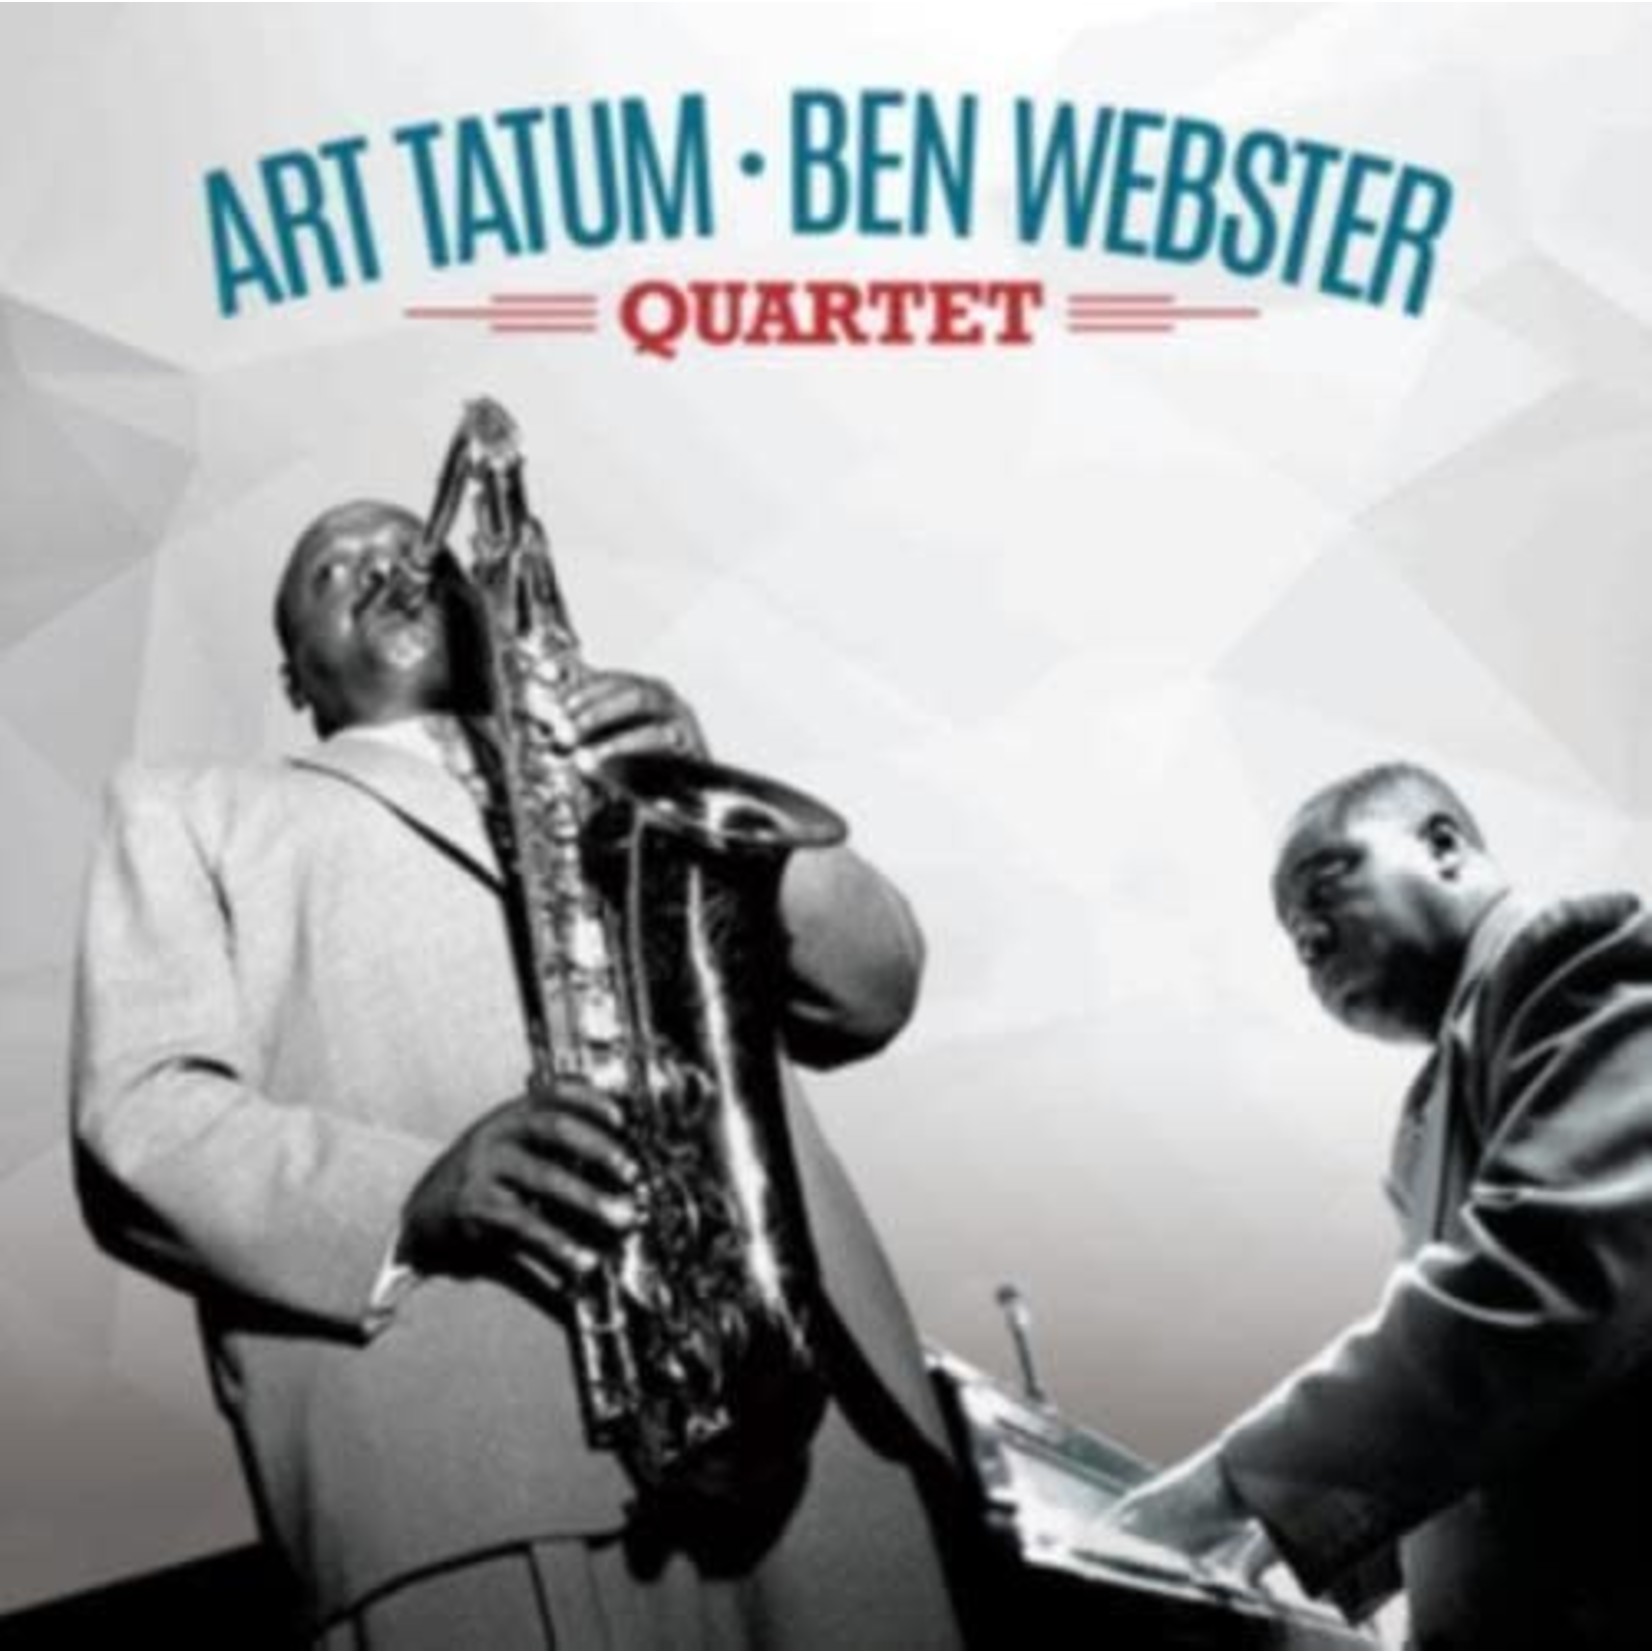 20th Century Masterworks Art Tatum - Art Tatum & Ben Webster Quartet (CD)